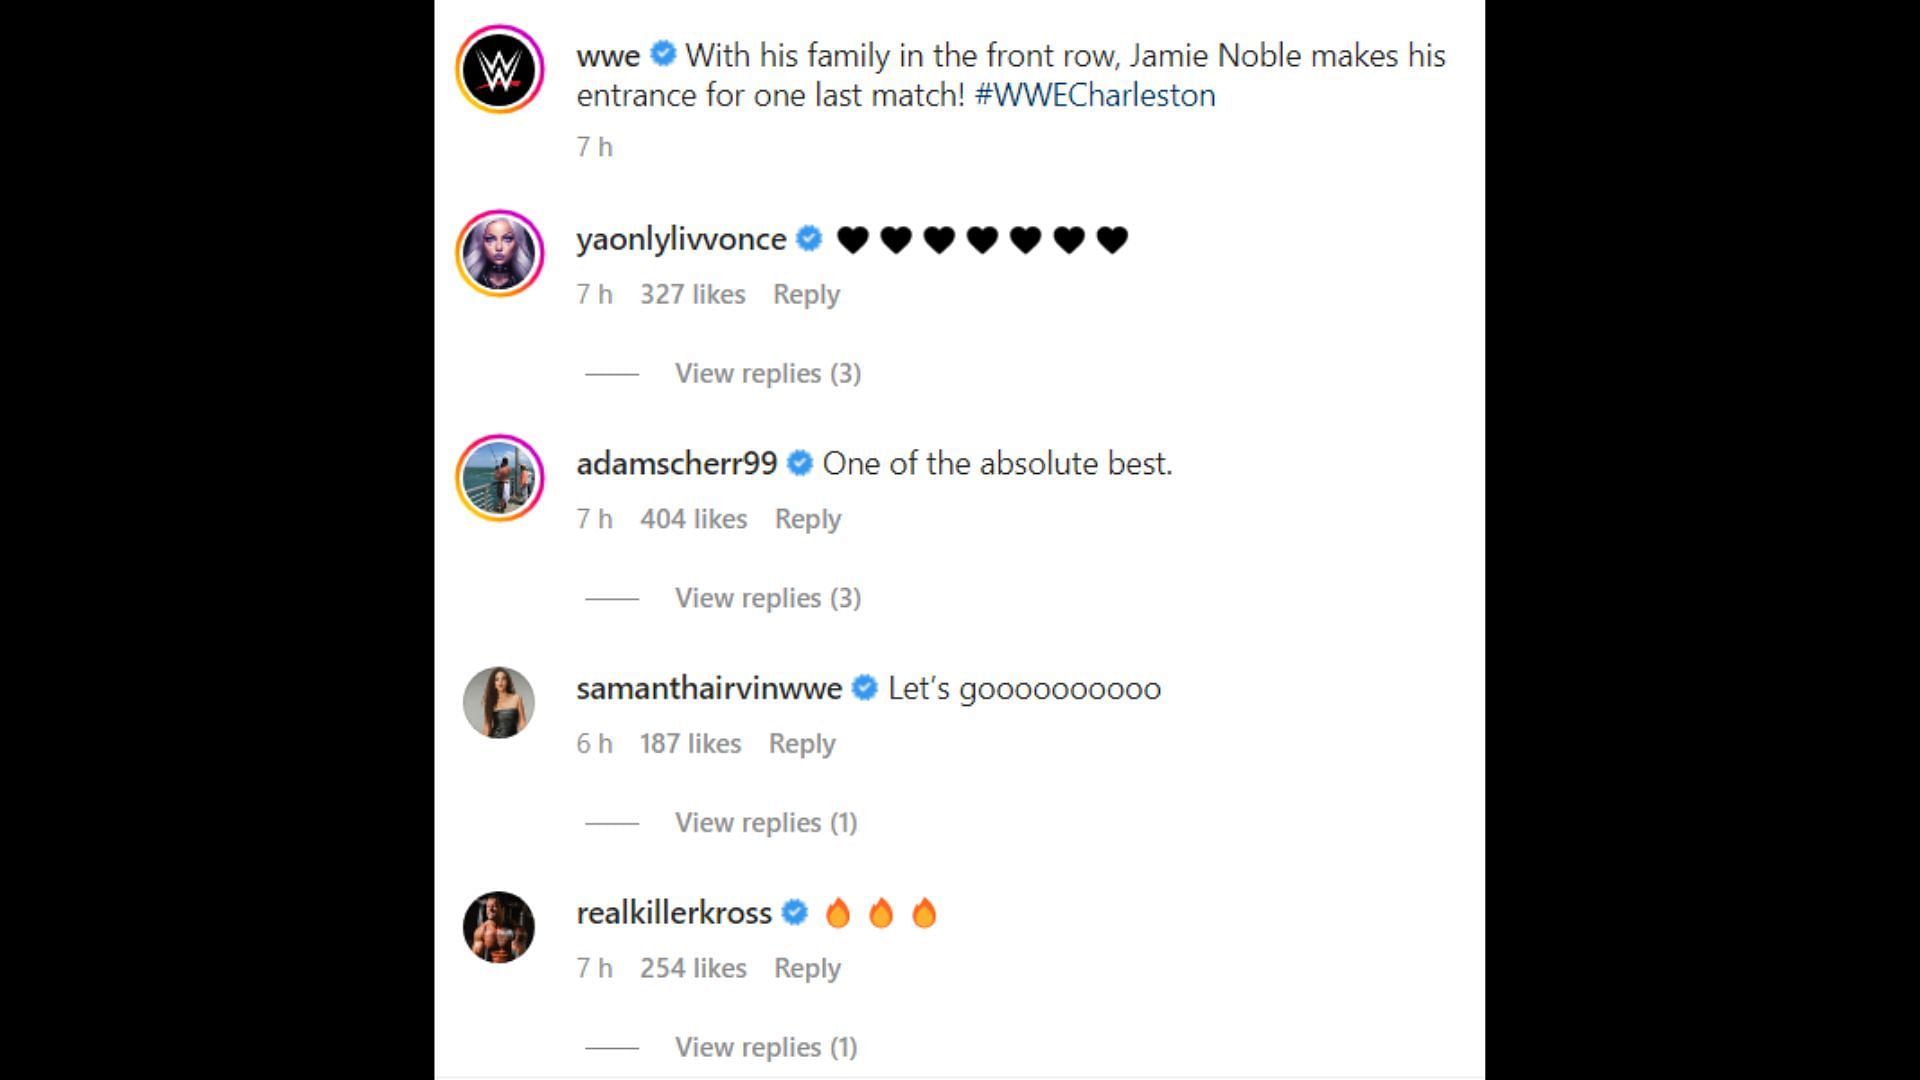 Braun Strowman was full of praise for Jamie Noble